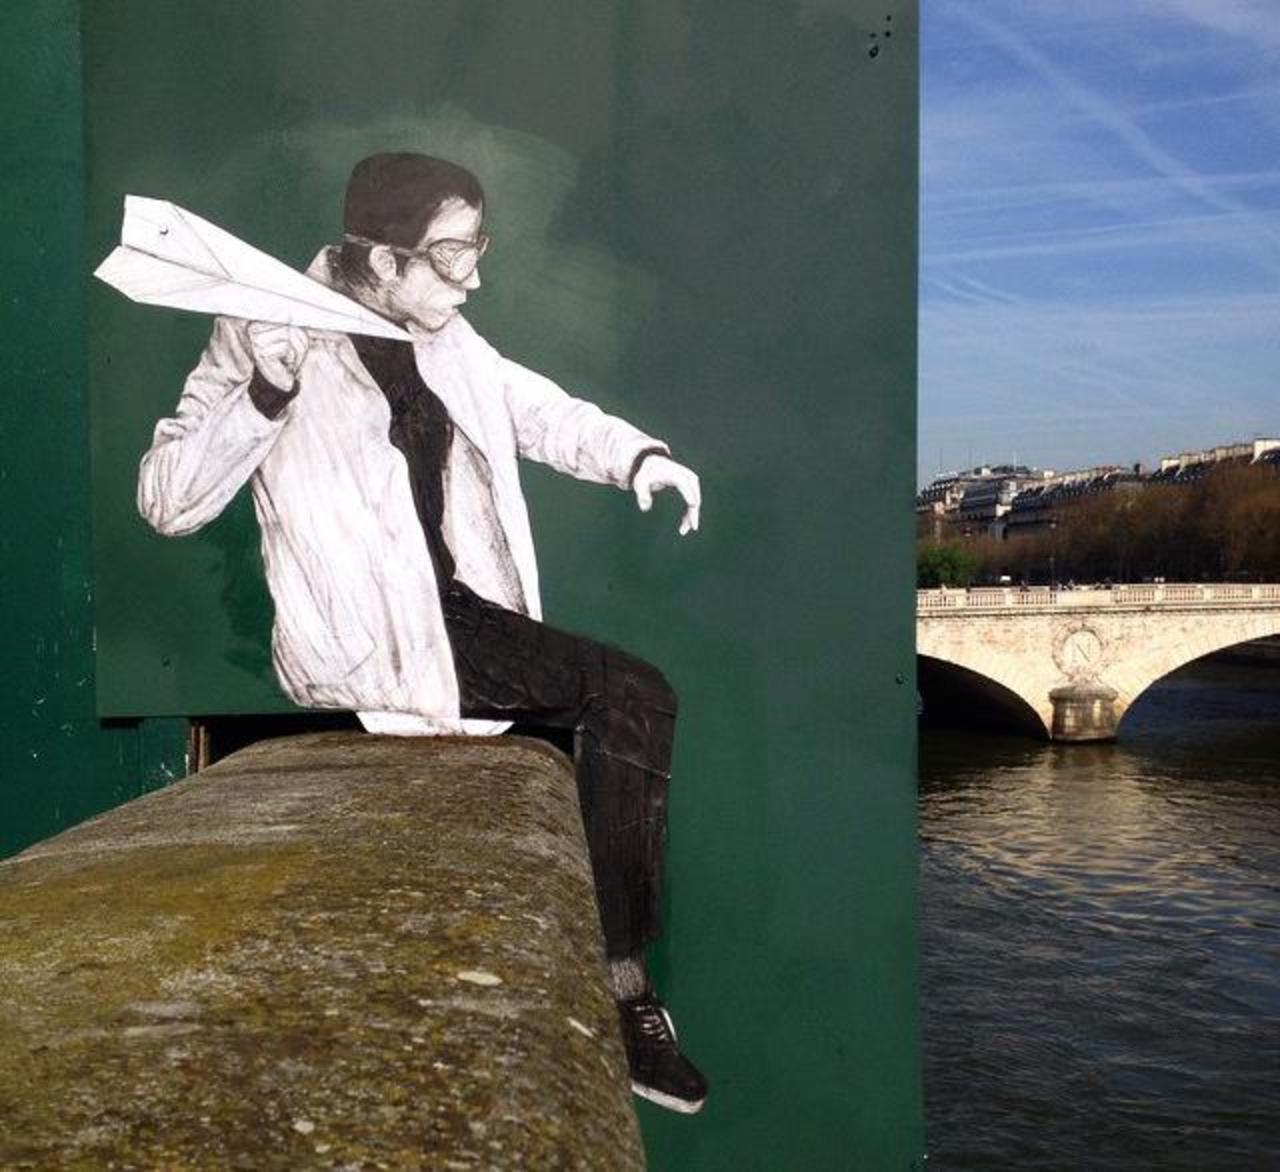 New Street Art by Levalet in Paris

#art #graffiti #arte #streetart http://t.co/DLx15yghvv googlestreetart chinatoniq